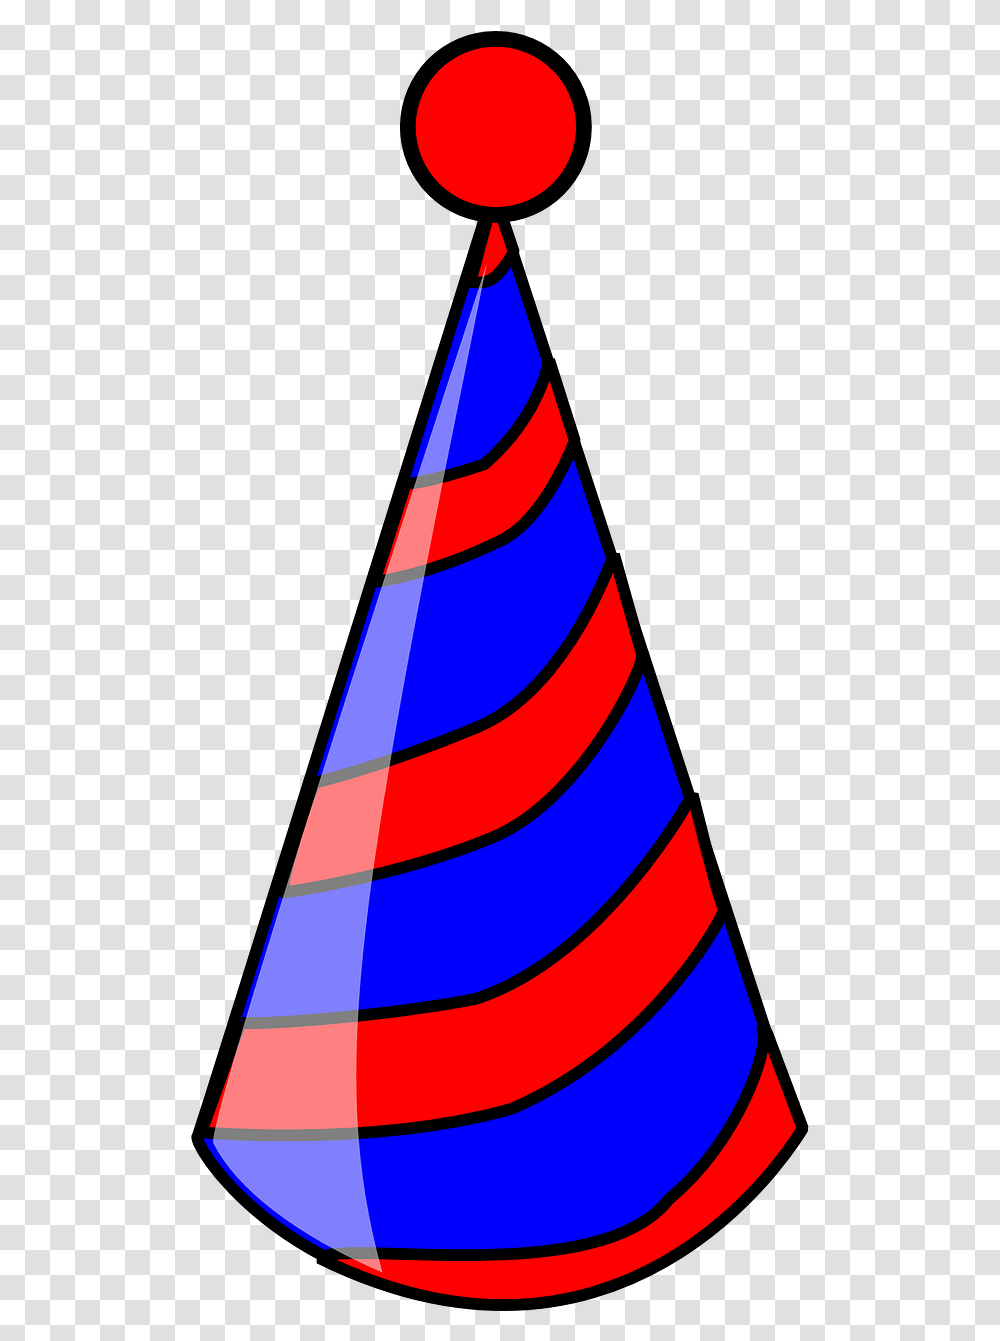 Hat Birthday Party Celebration Image Party Hat Clip Art, Apparel Transparent Png